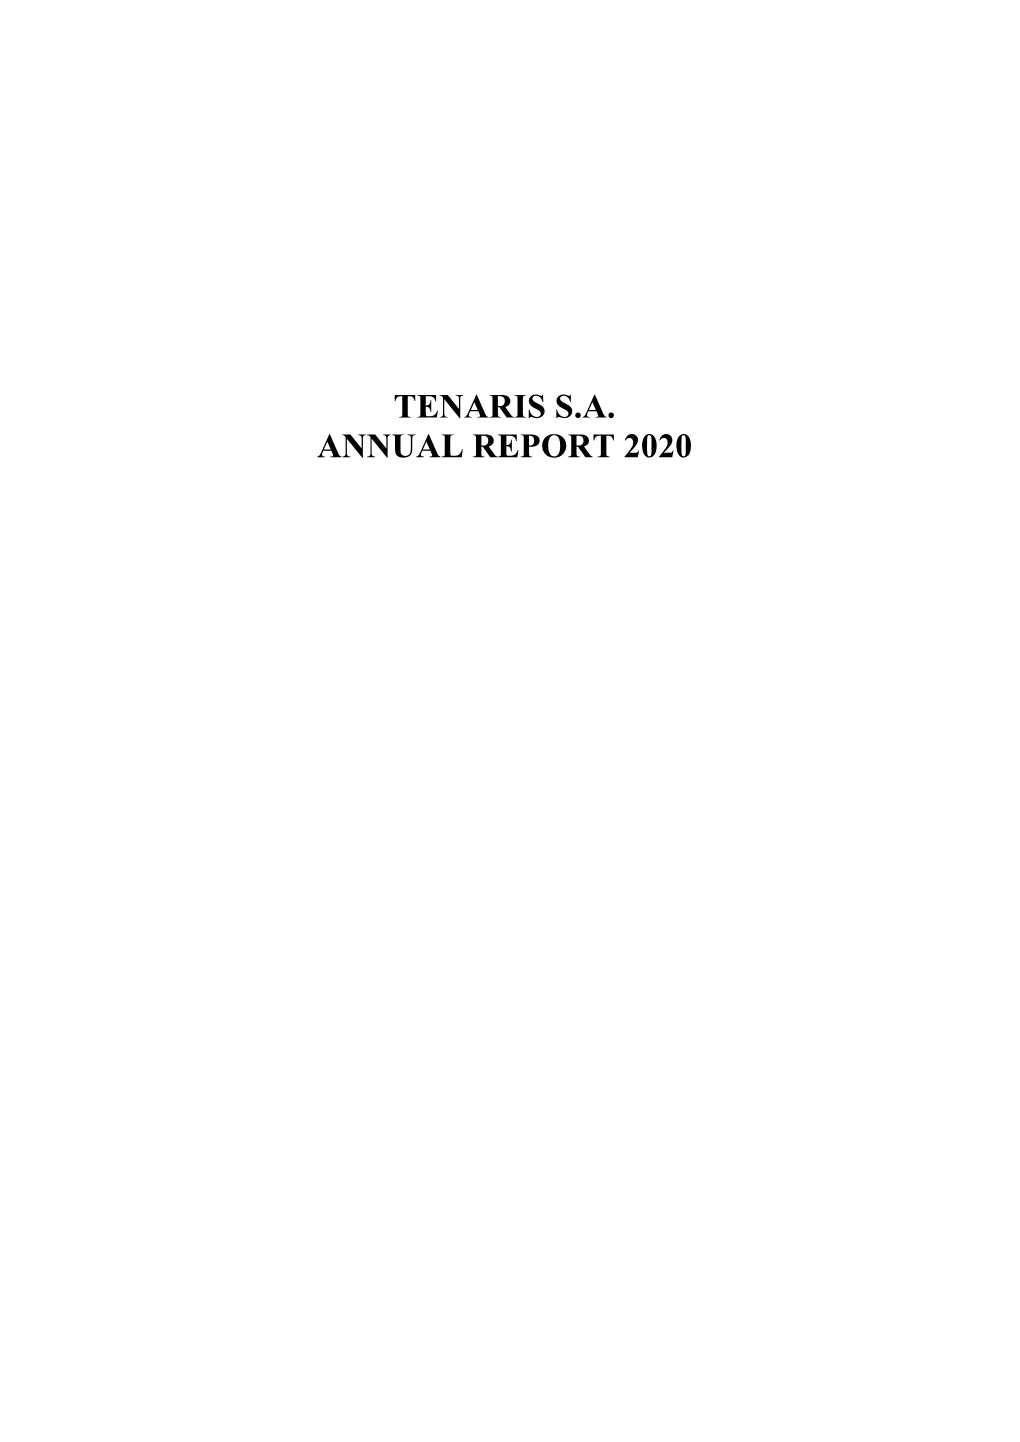 Tenaris S.A. Annual Report 2020